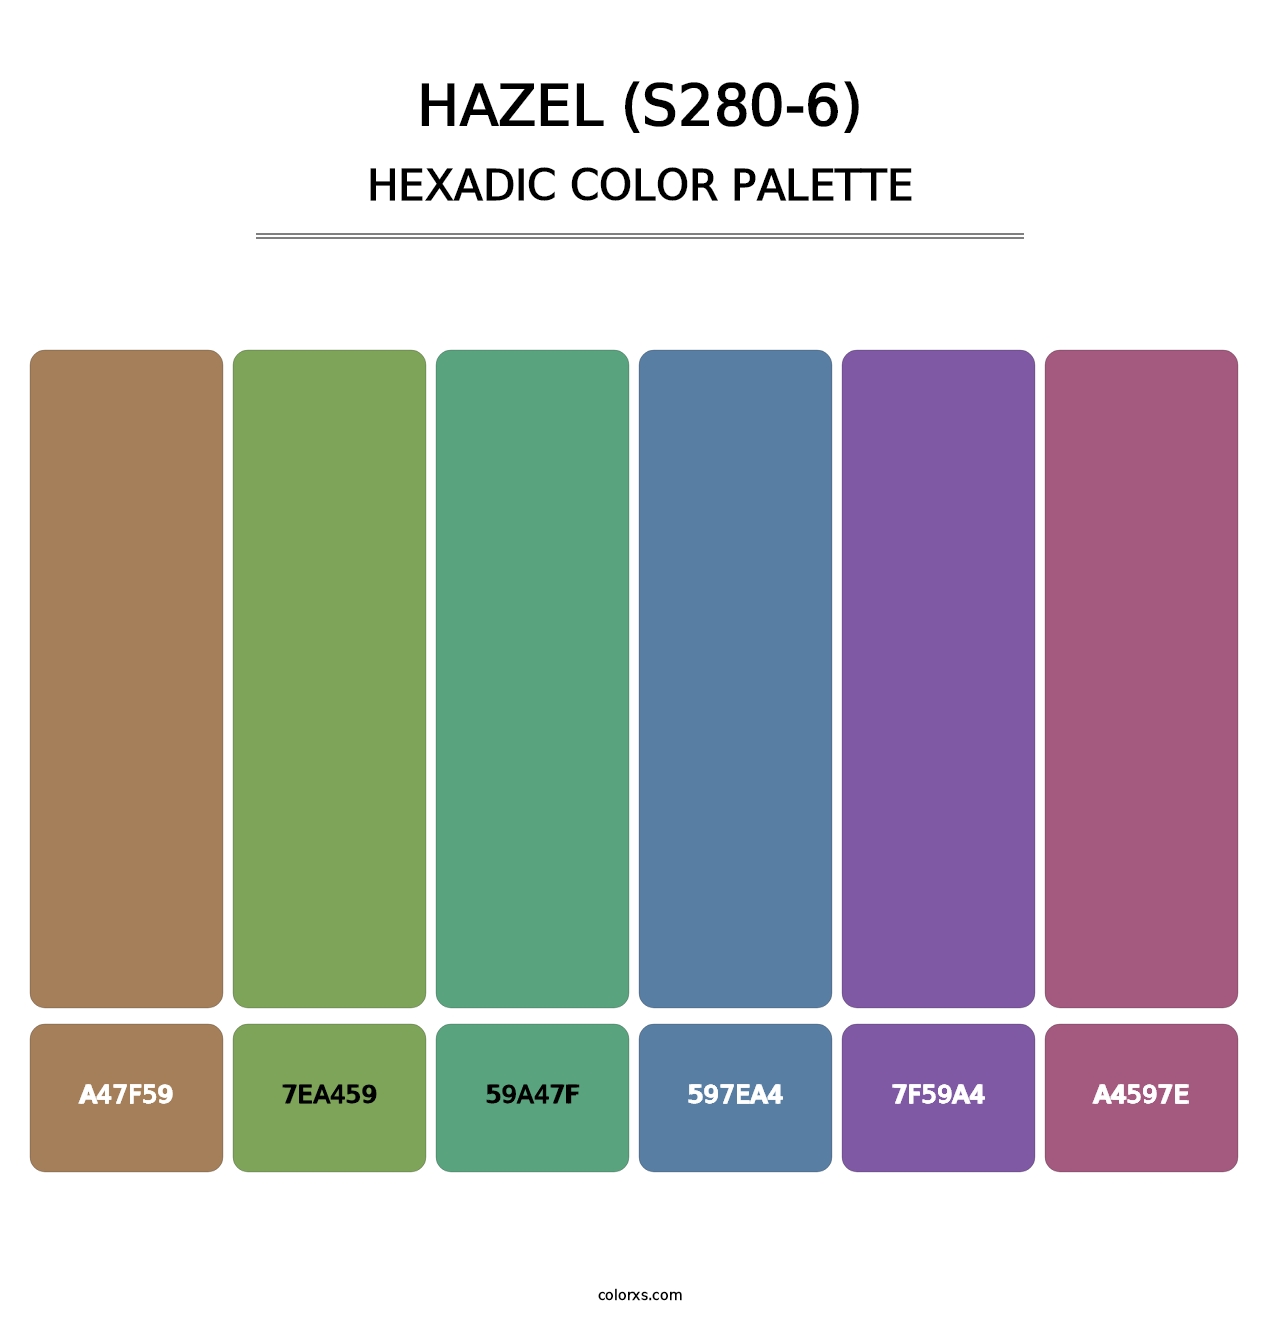 Hazel (S280-6) - Hexadic Color Palette